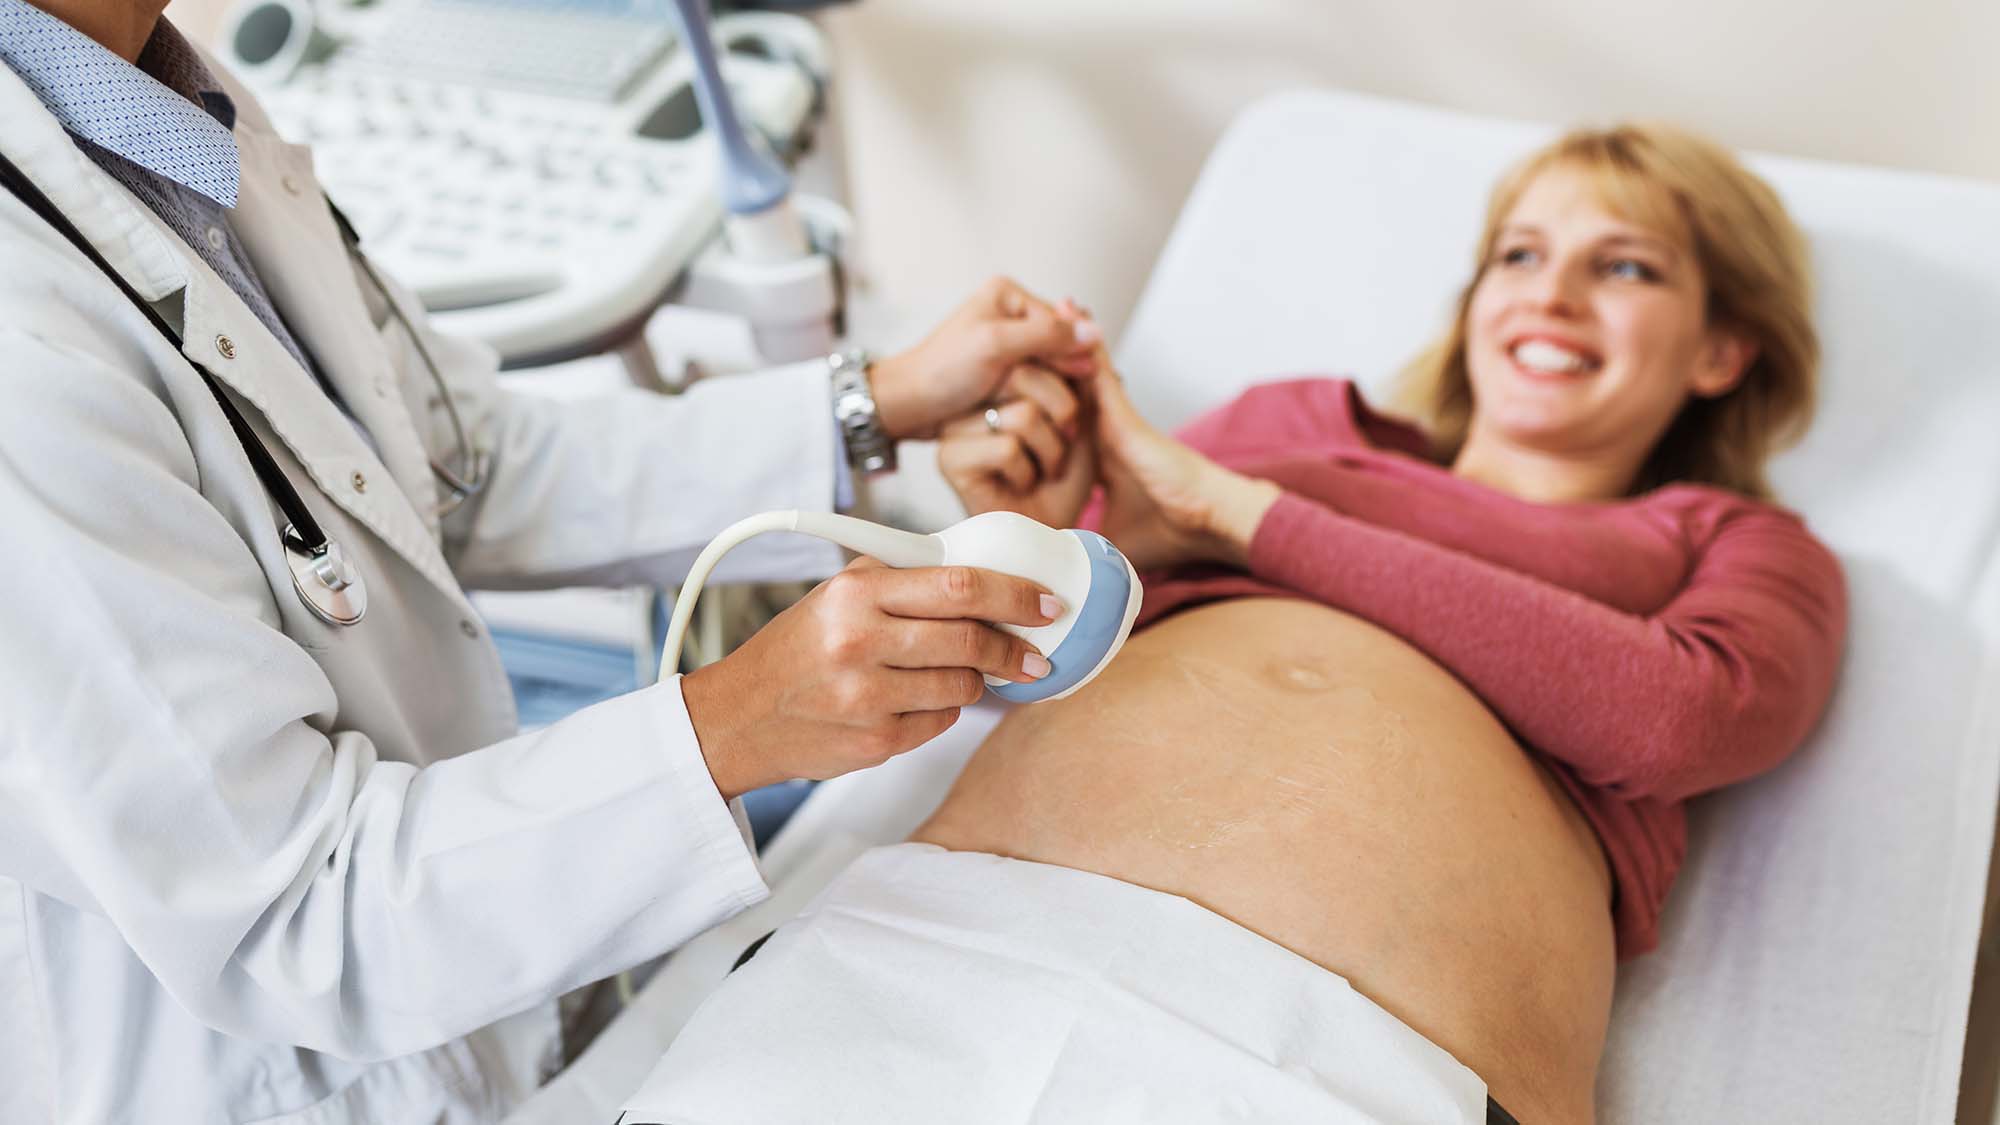 prenatal care visits in third trimester